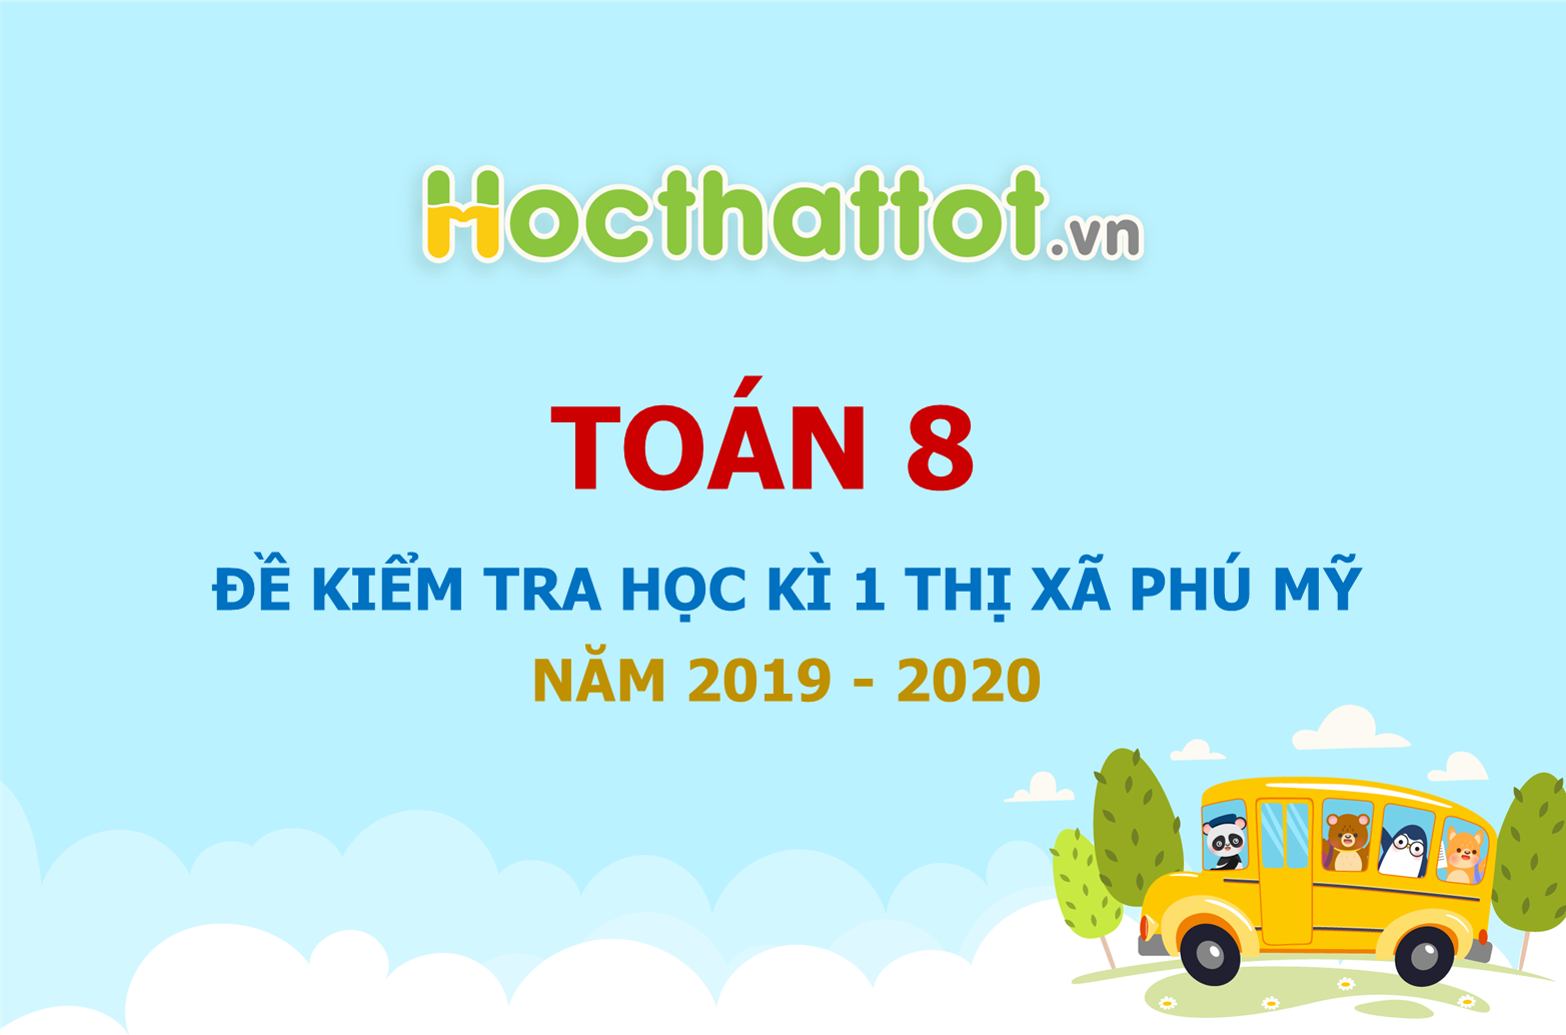 de-thi-hoc-ki-1-toan-8-nam-2019-2020-phong-gddt-phu-my